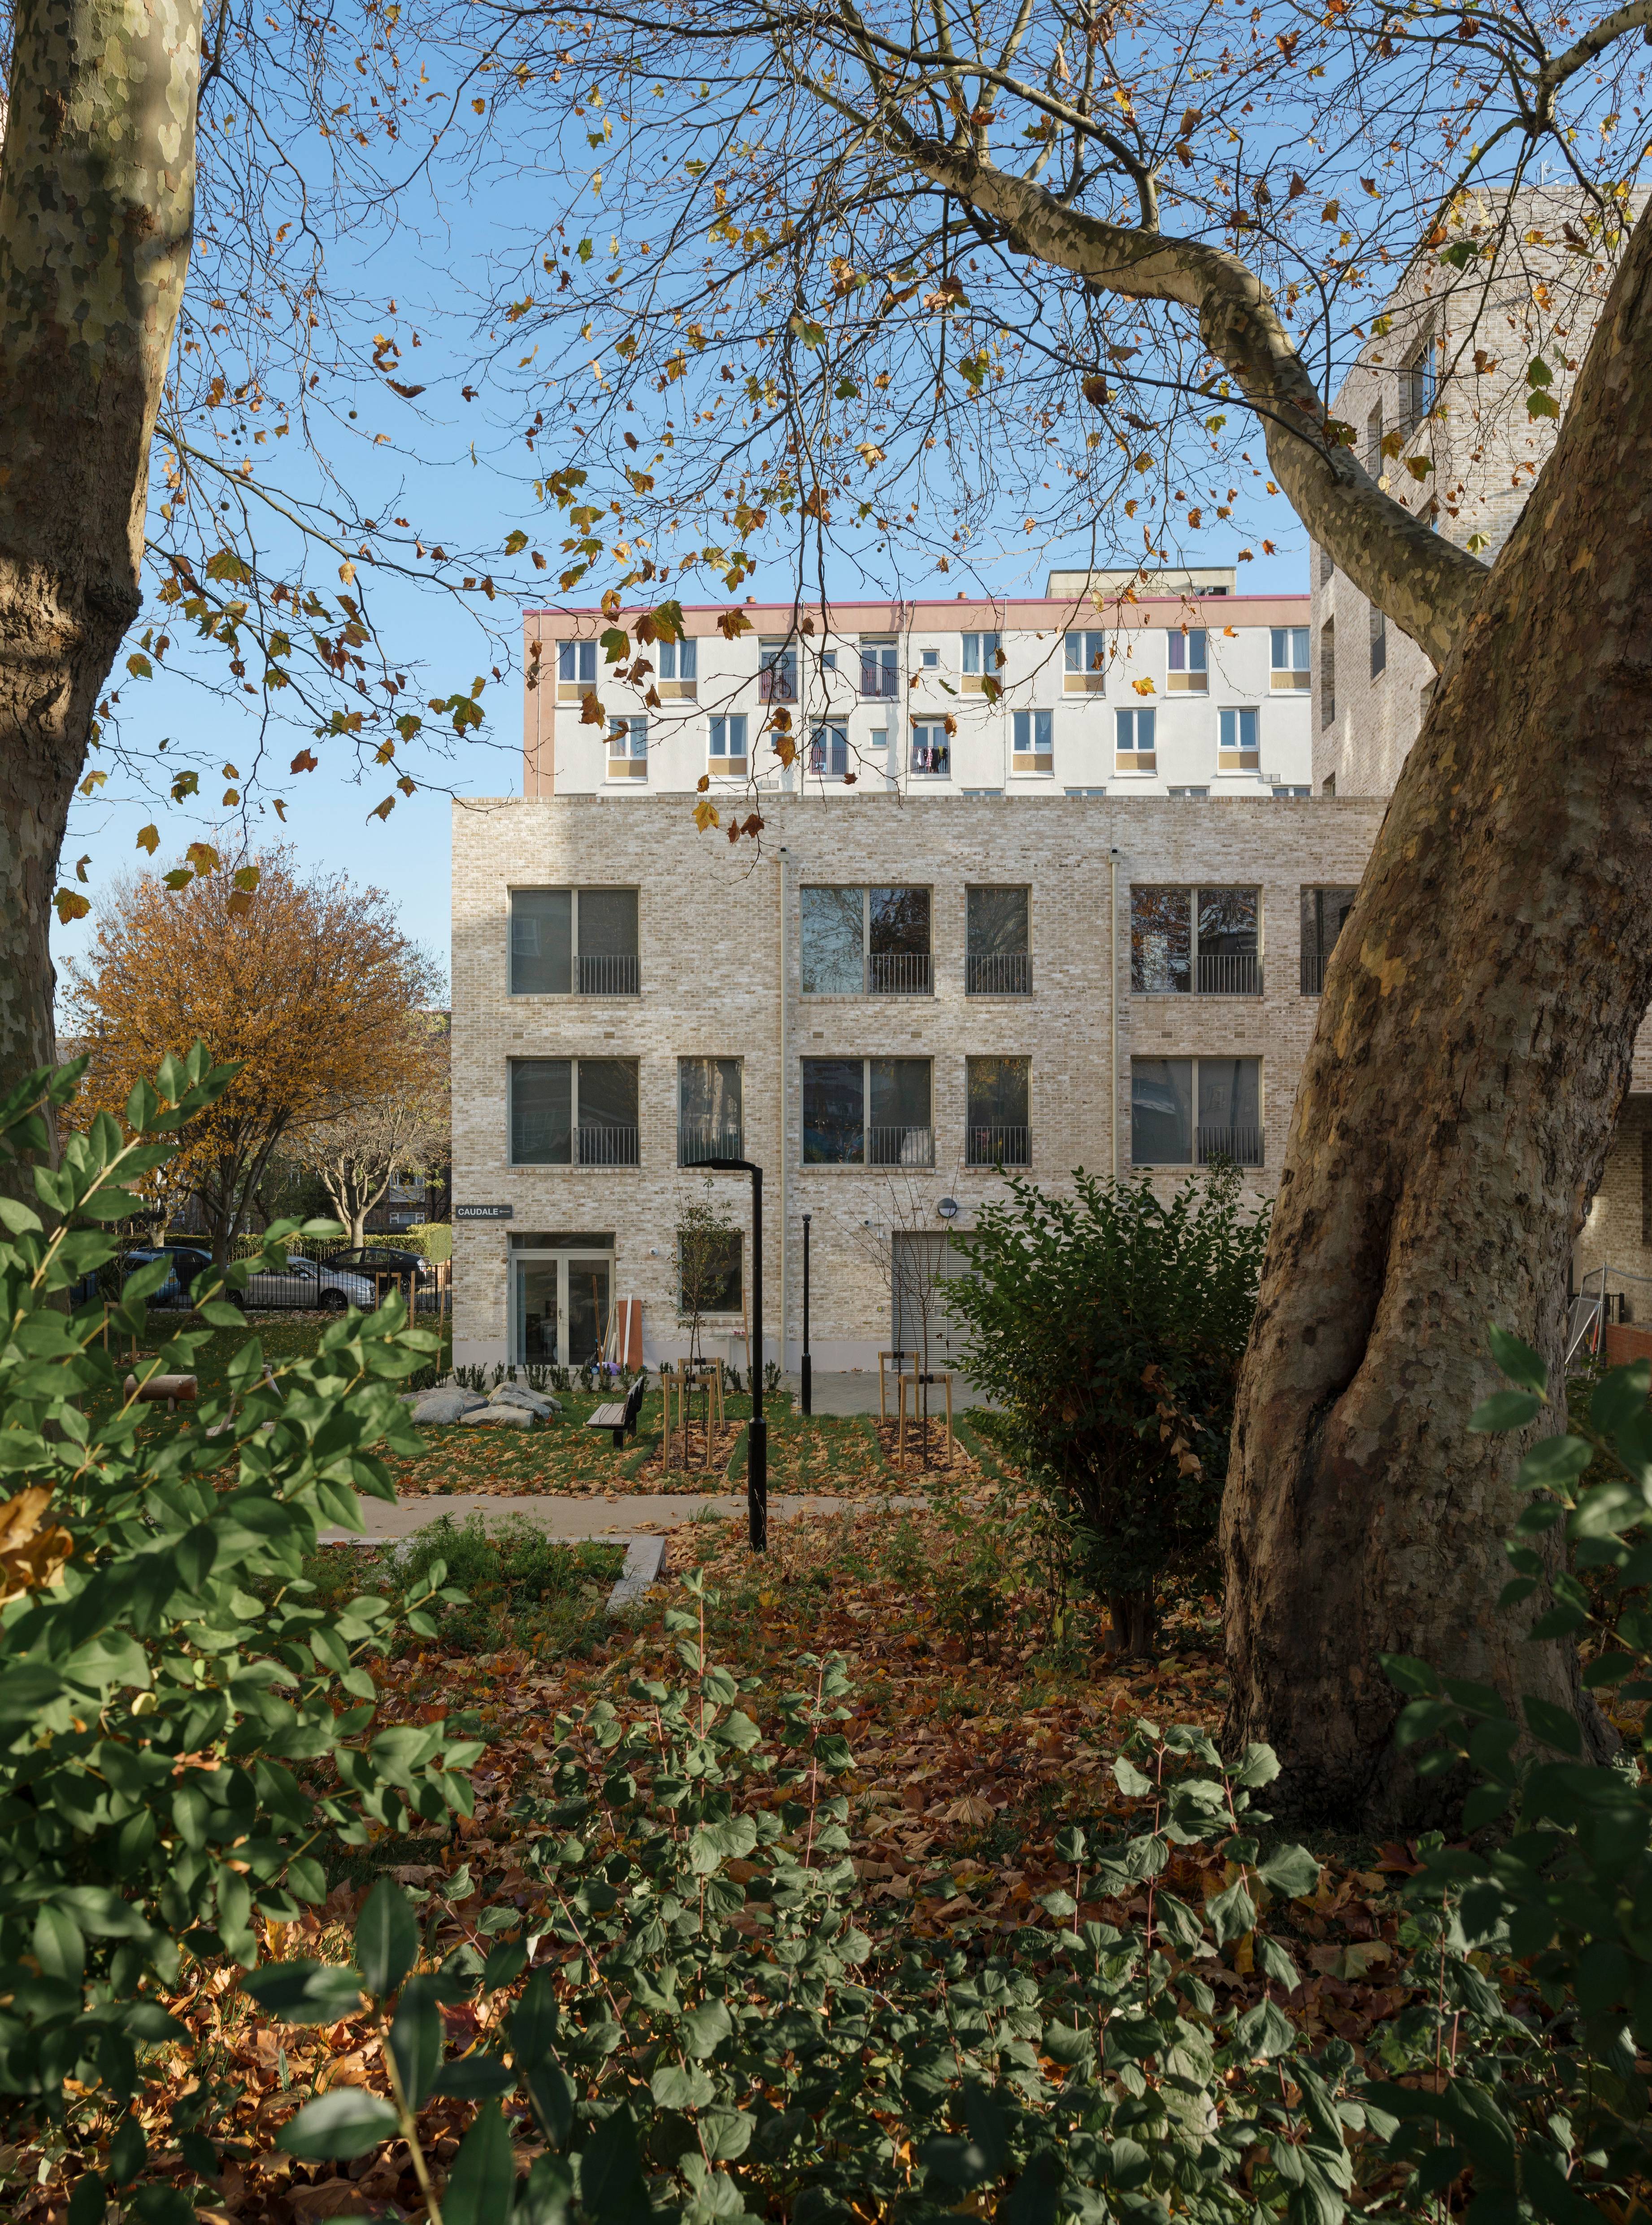 Caudale Housing Scheme (London, NW1) Mae Architects. Photo: Stale Eriksen